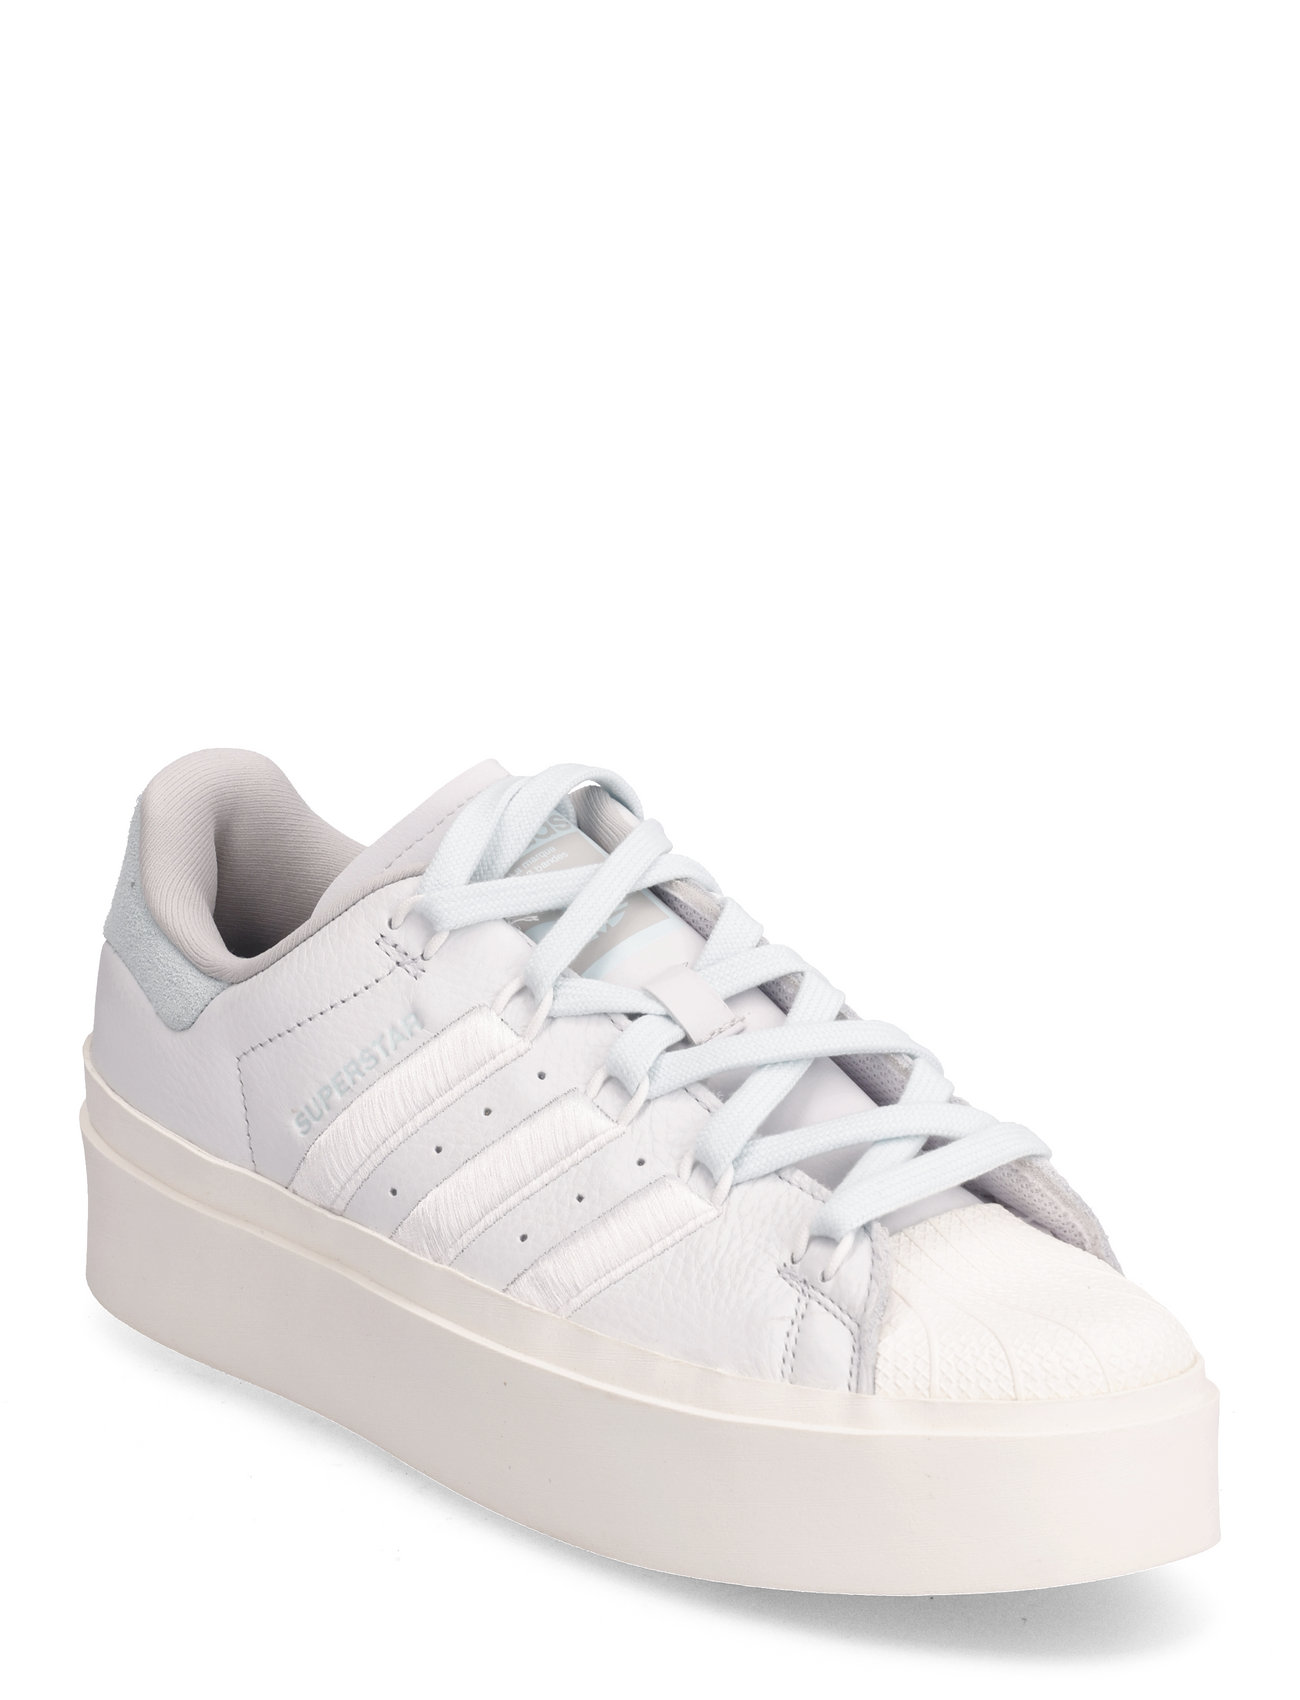 Superstar B Ga Shoes Sport Sneakers Low-top Sneakers White Adidas Originals